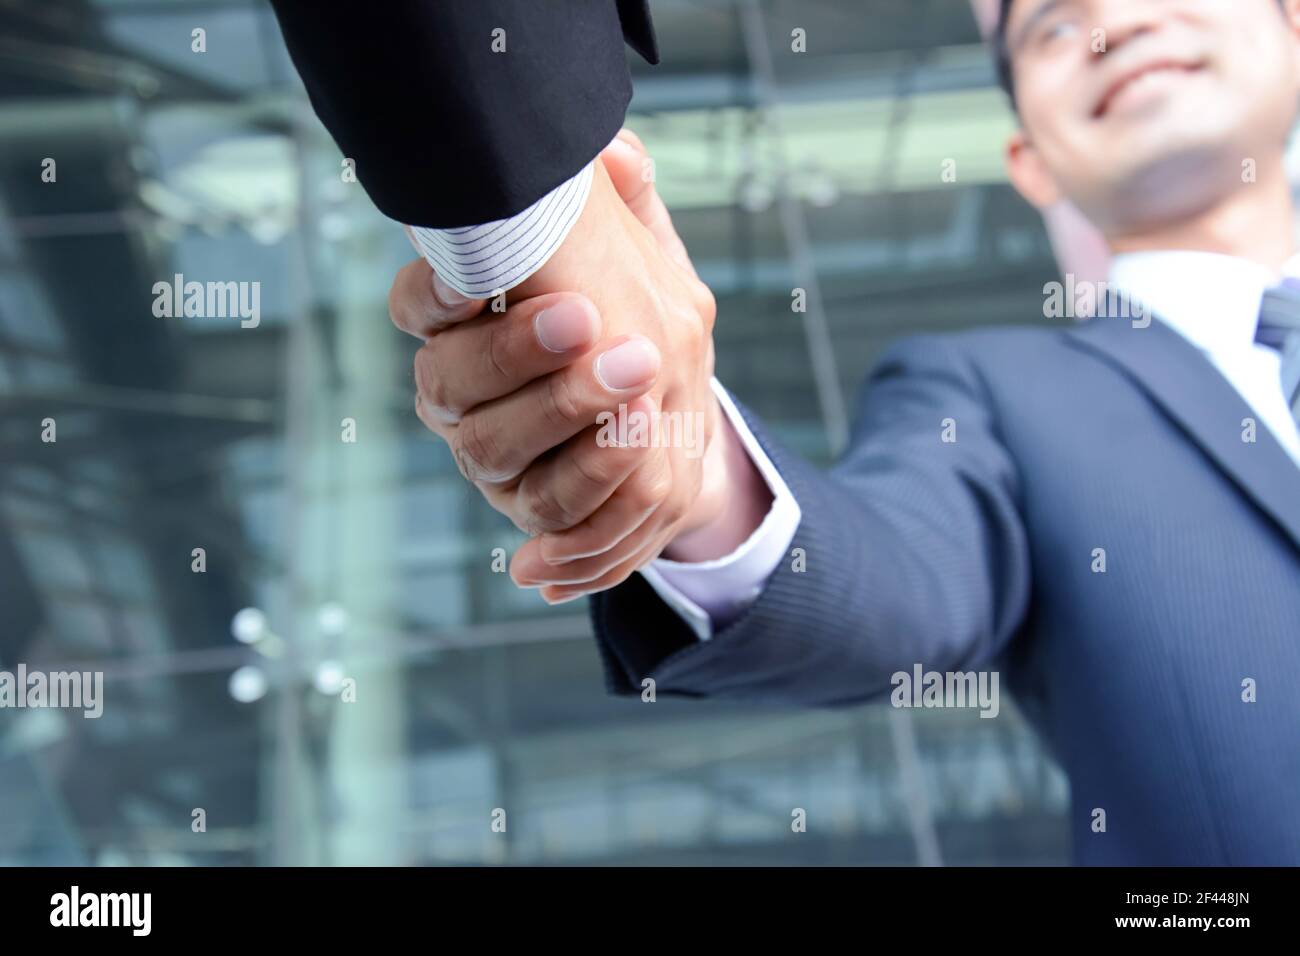 Handshake of businessmen - success, congratulation, greeting & business partner concepts Stock Photo